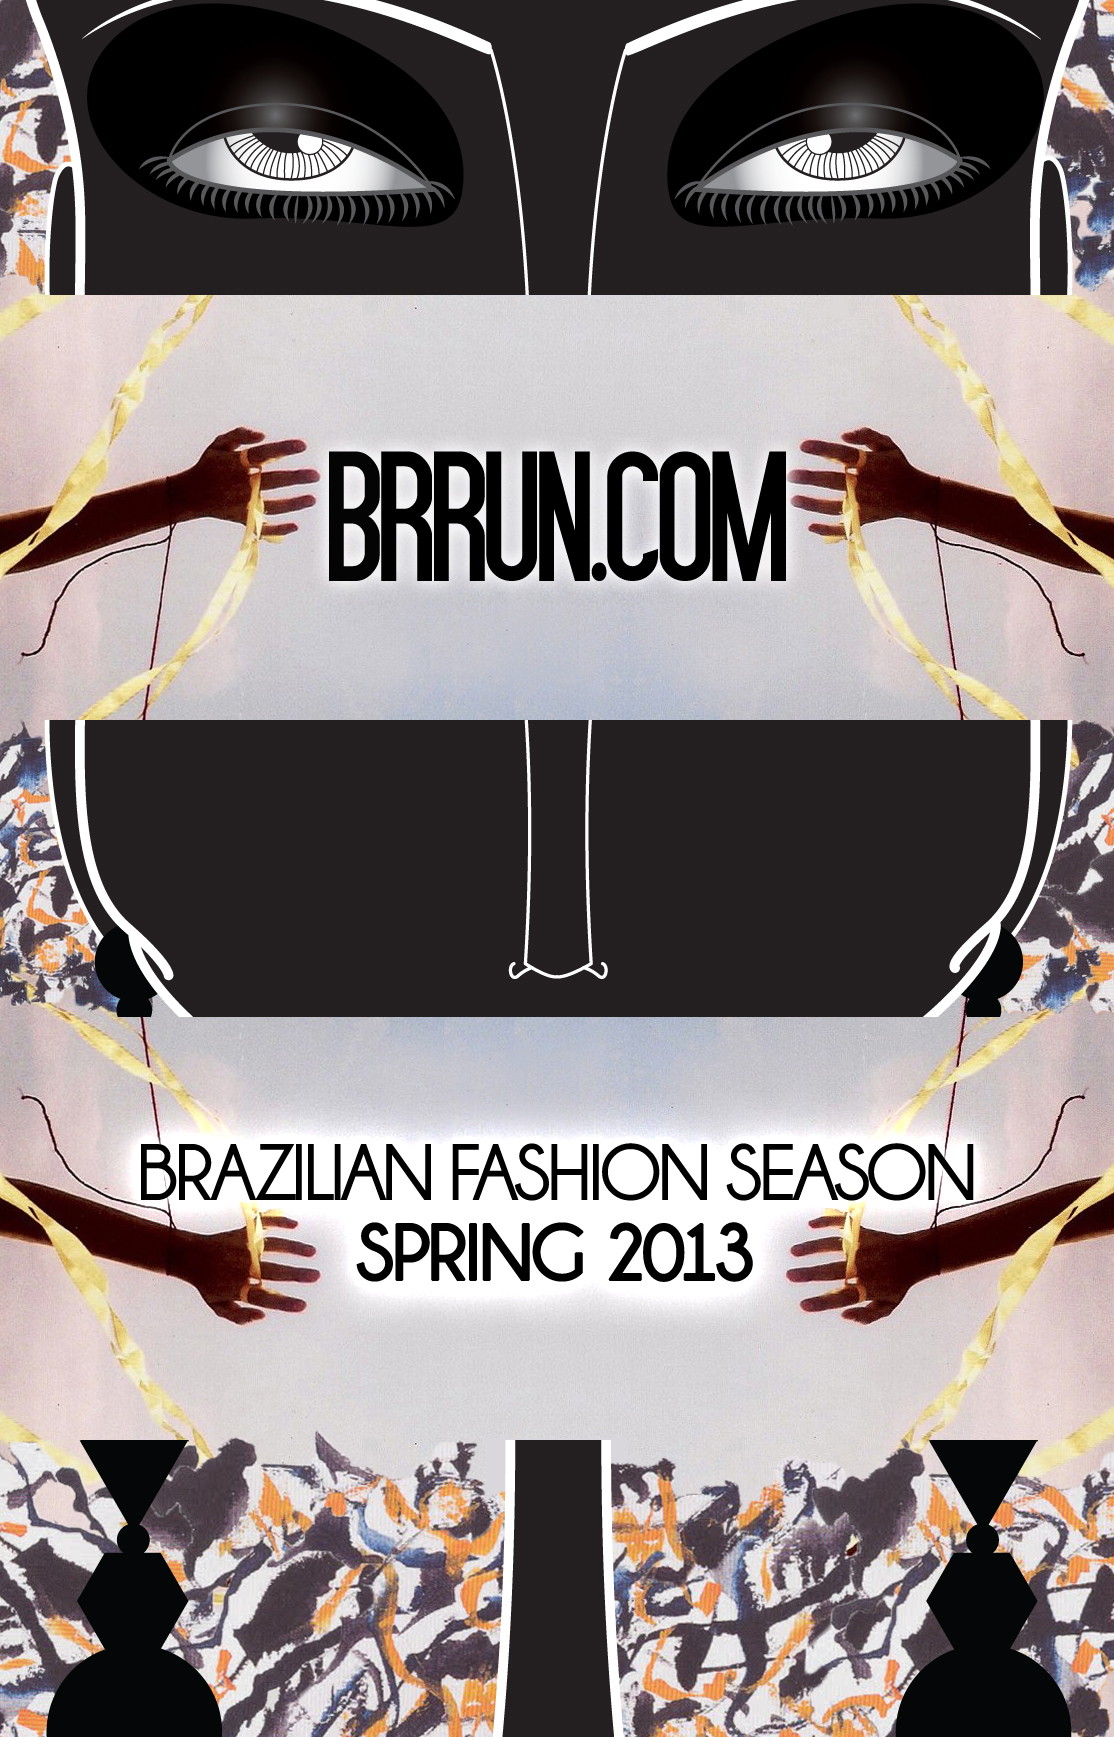 Brazilian Fashion Season, Spring 2013 by Bruno Capasso, Leandro Dário, Beto Urrick e Brunno Almeida Maia @ Tiago Gomes